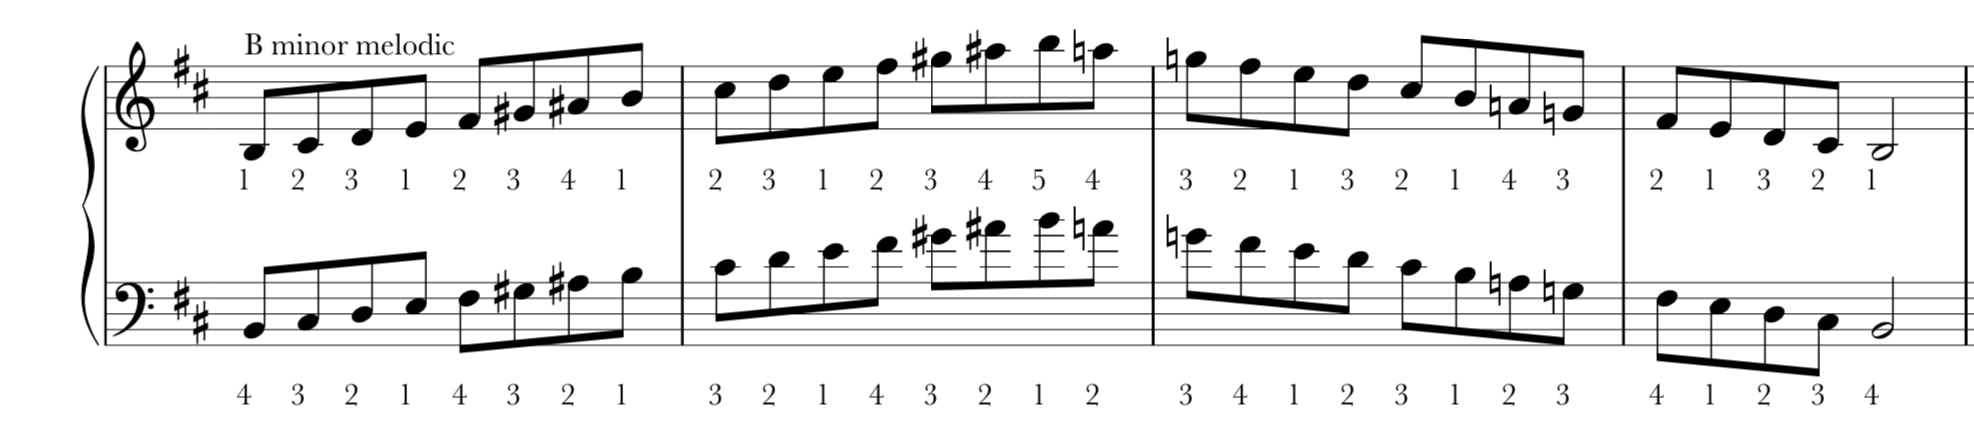 B melodic minor scale